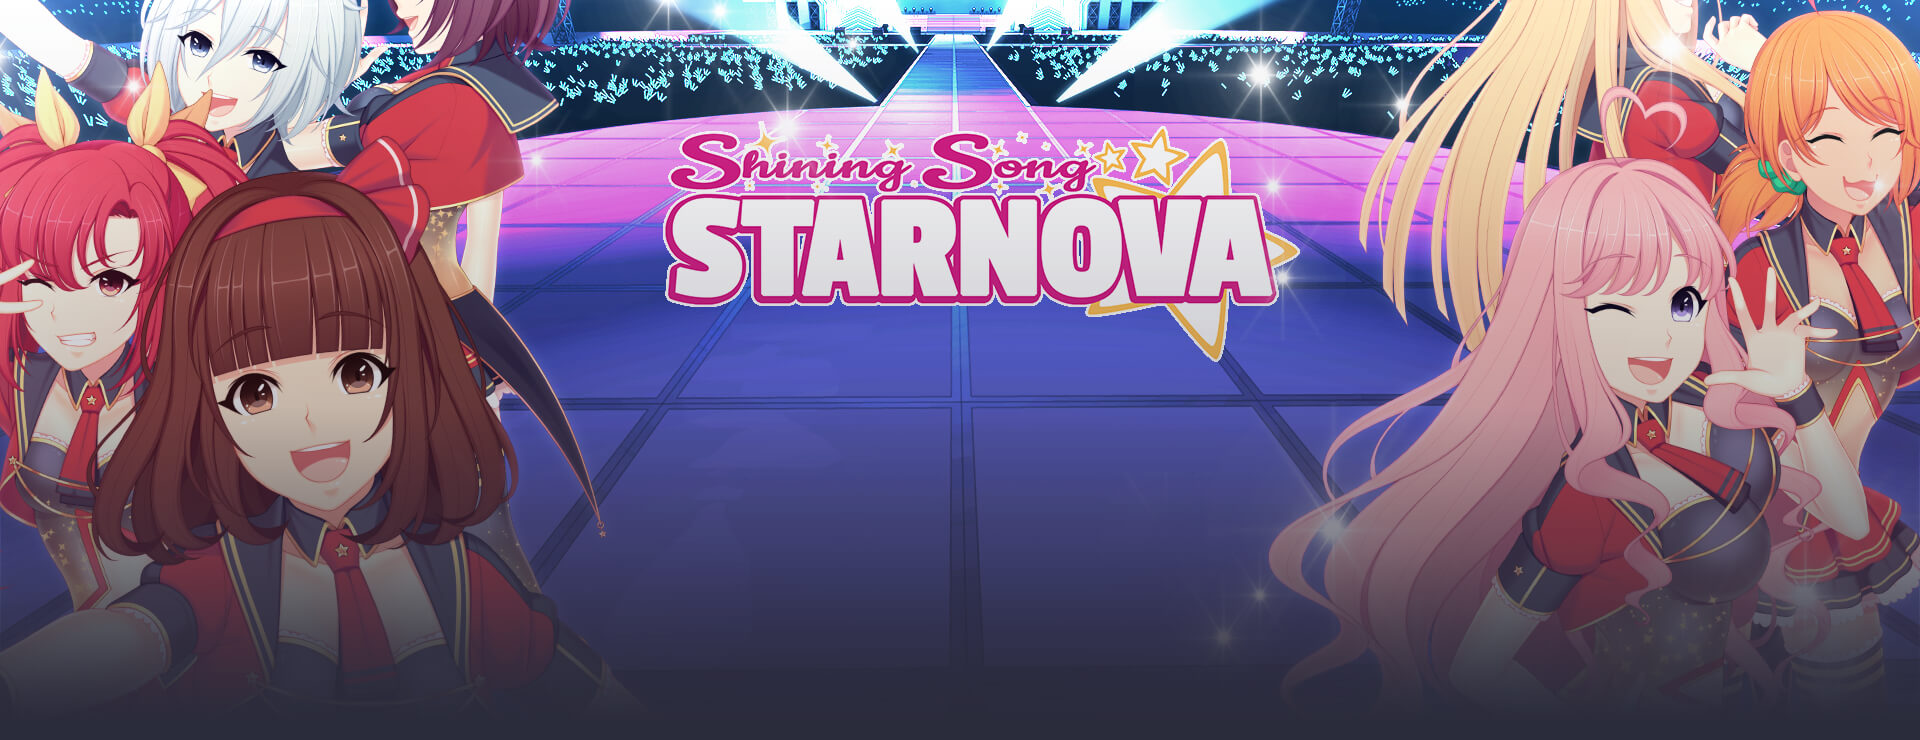 Shining Song Starnova - ビジュアルノベル ゲーム